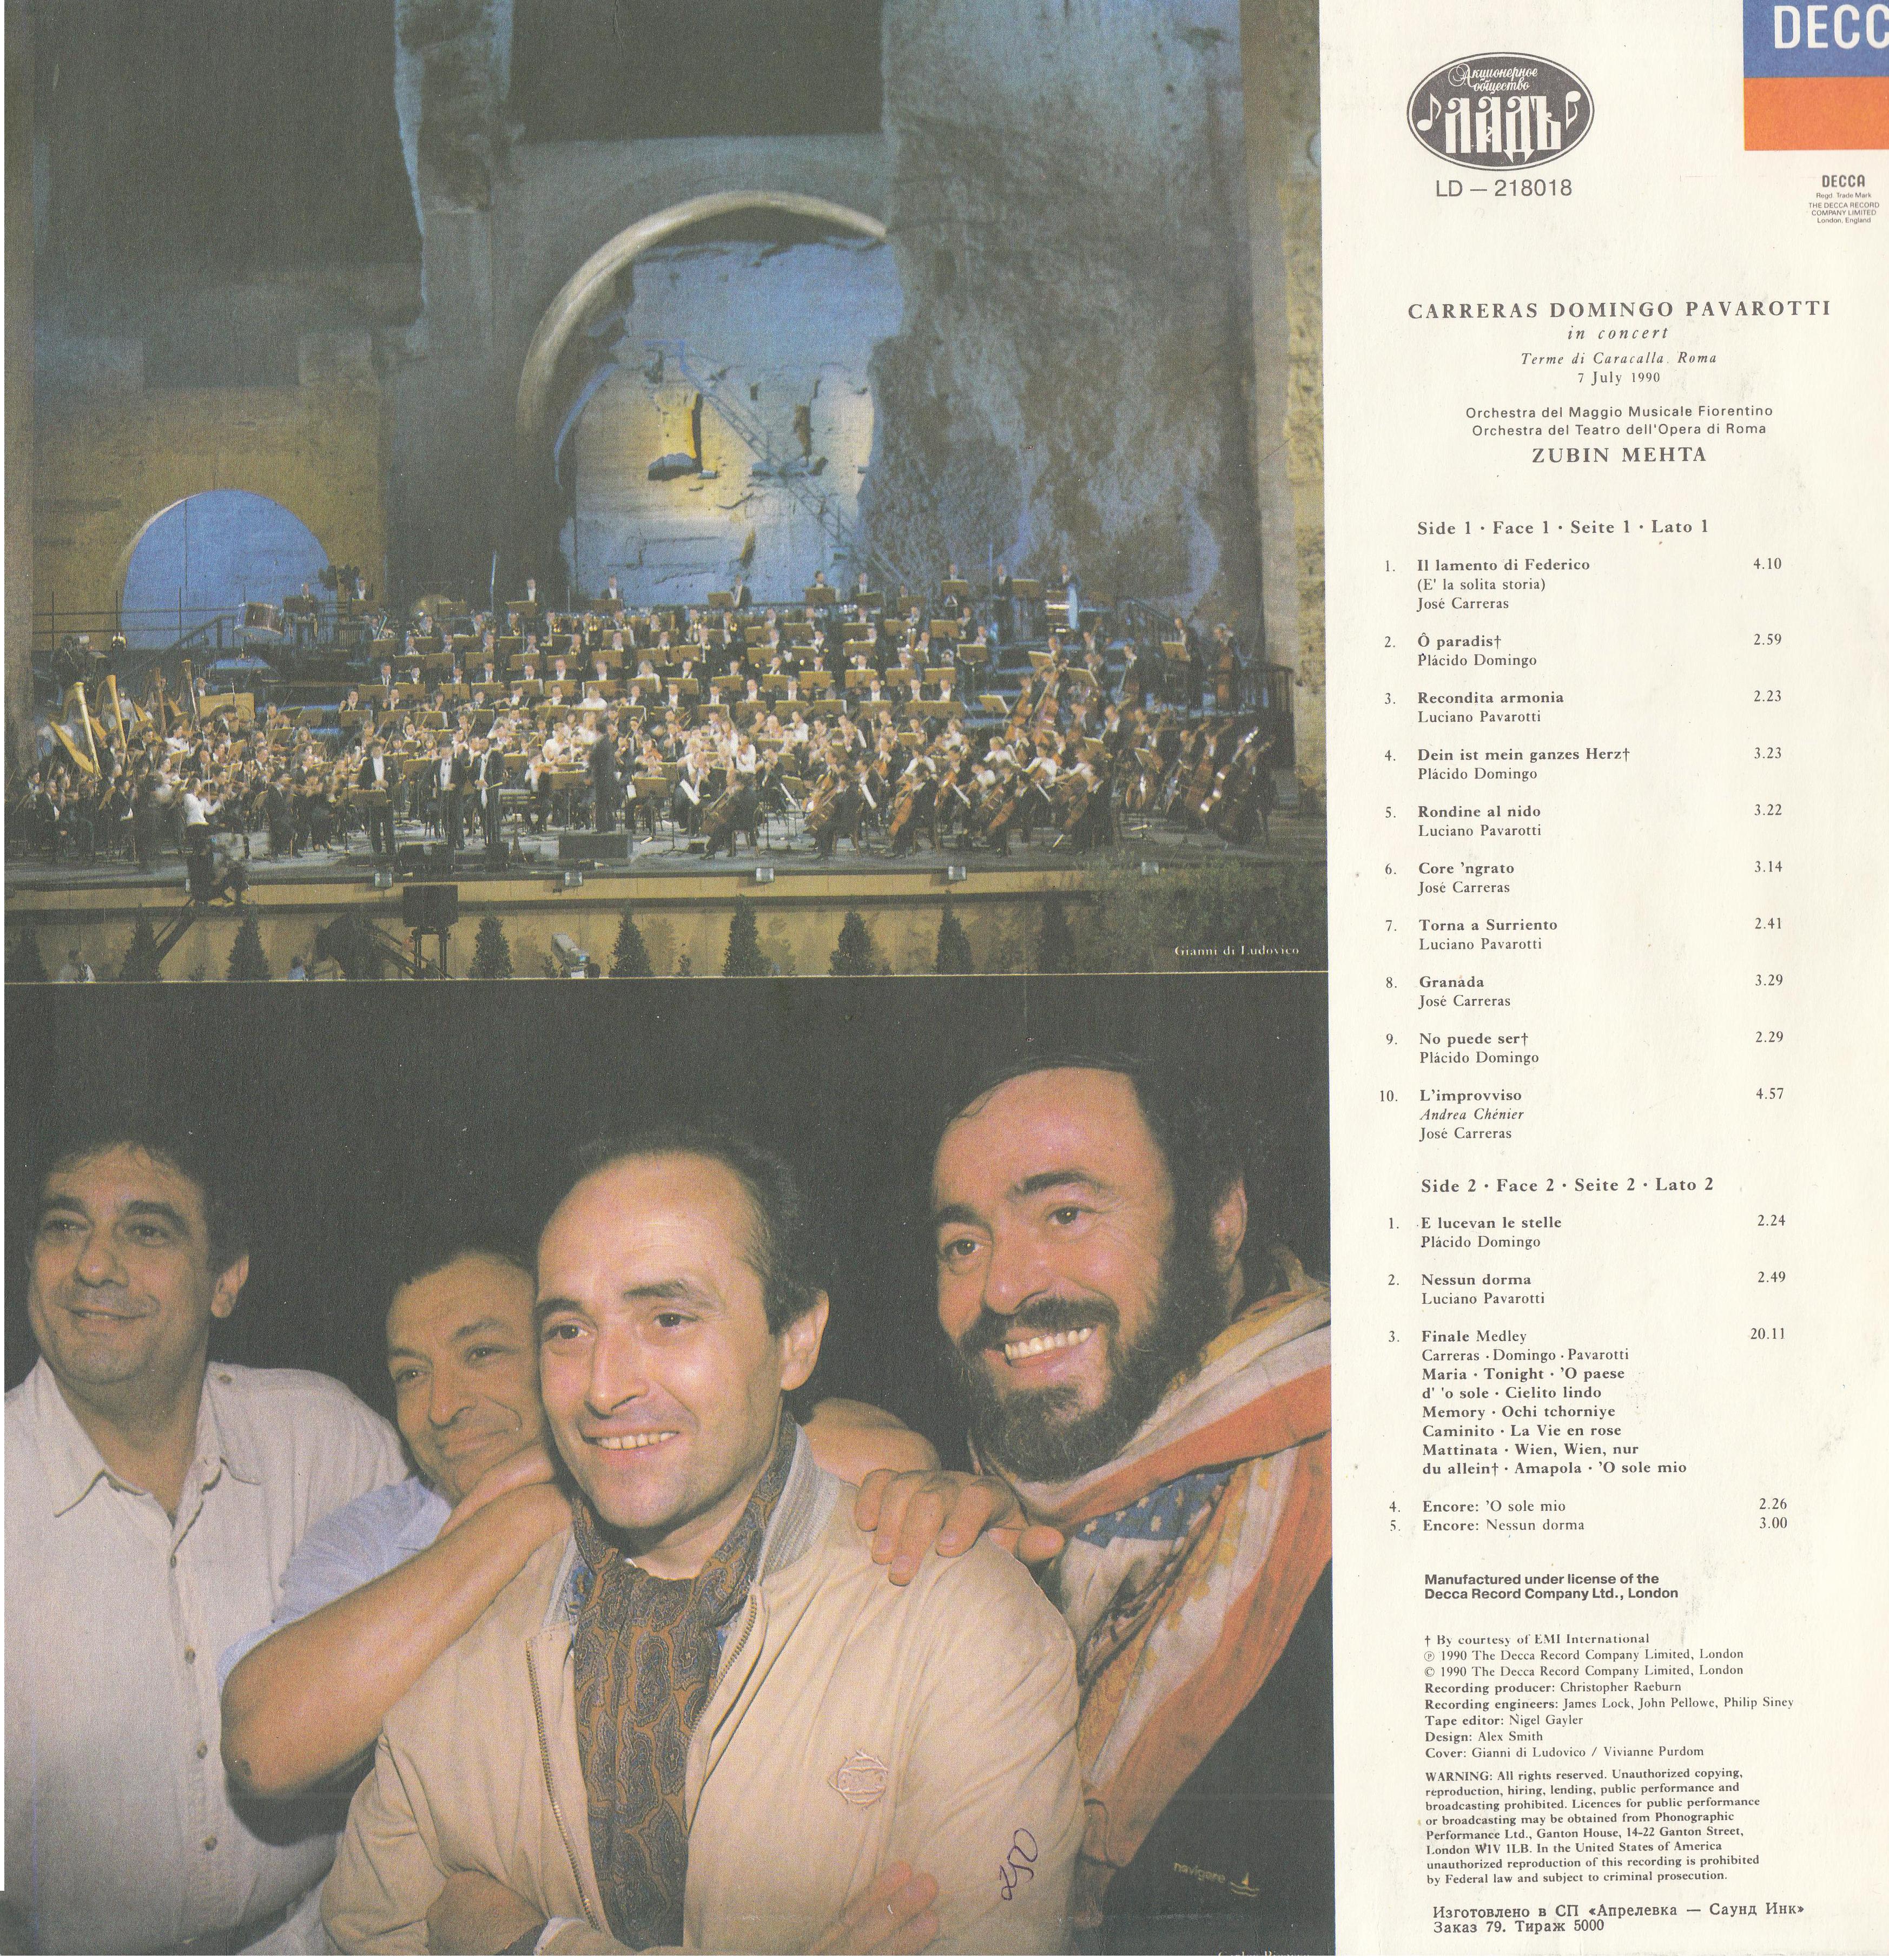 Carreras, Domingo, Pavarotti — In Concert